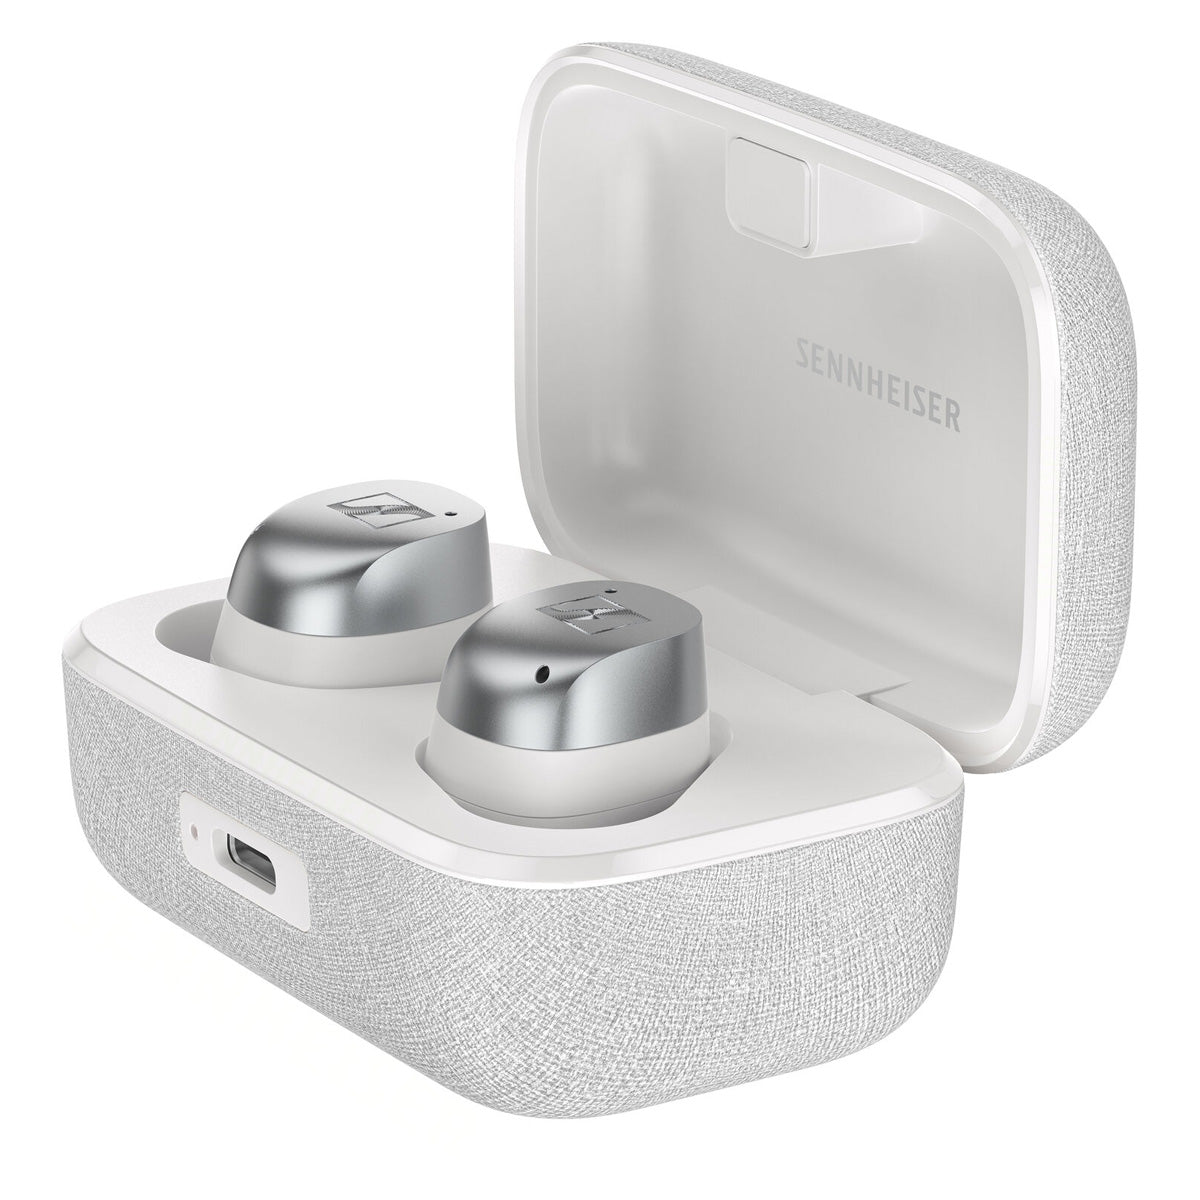 Sennheiser MOMENTUM True Wireless 4 Noise-Canceling Earbuds - White Silver